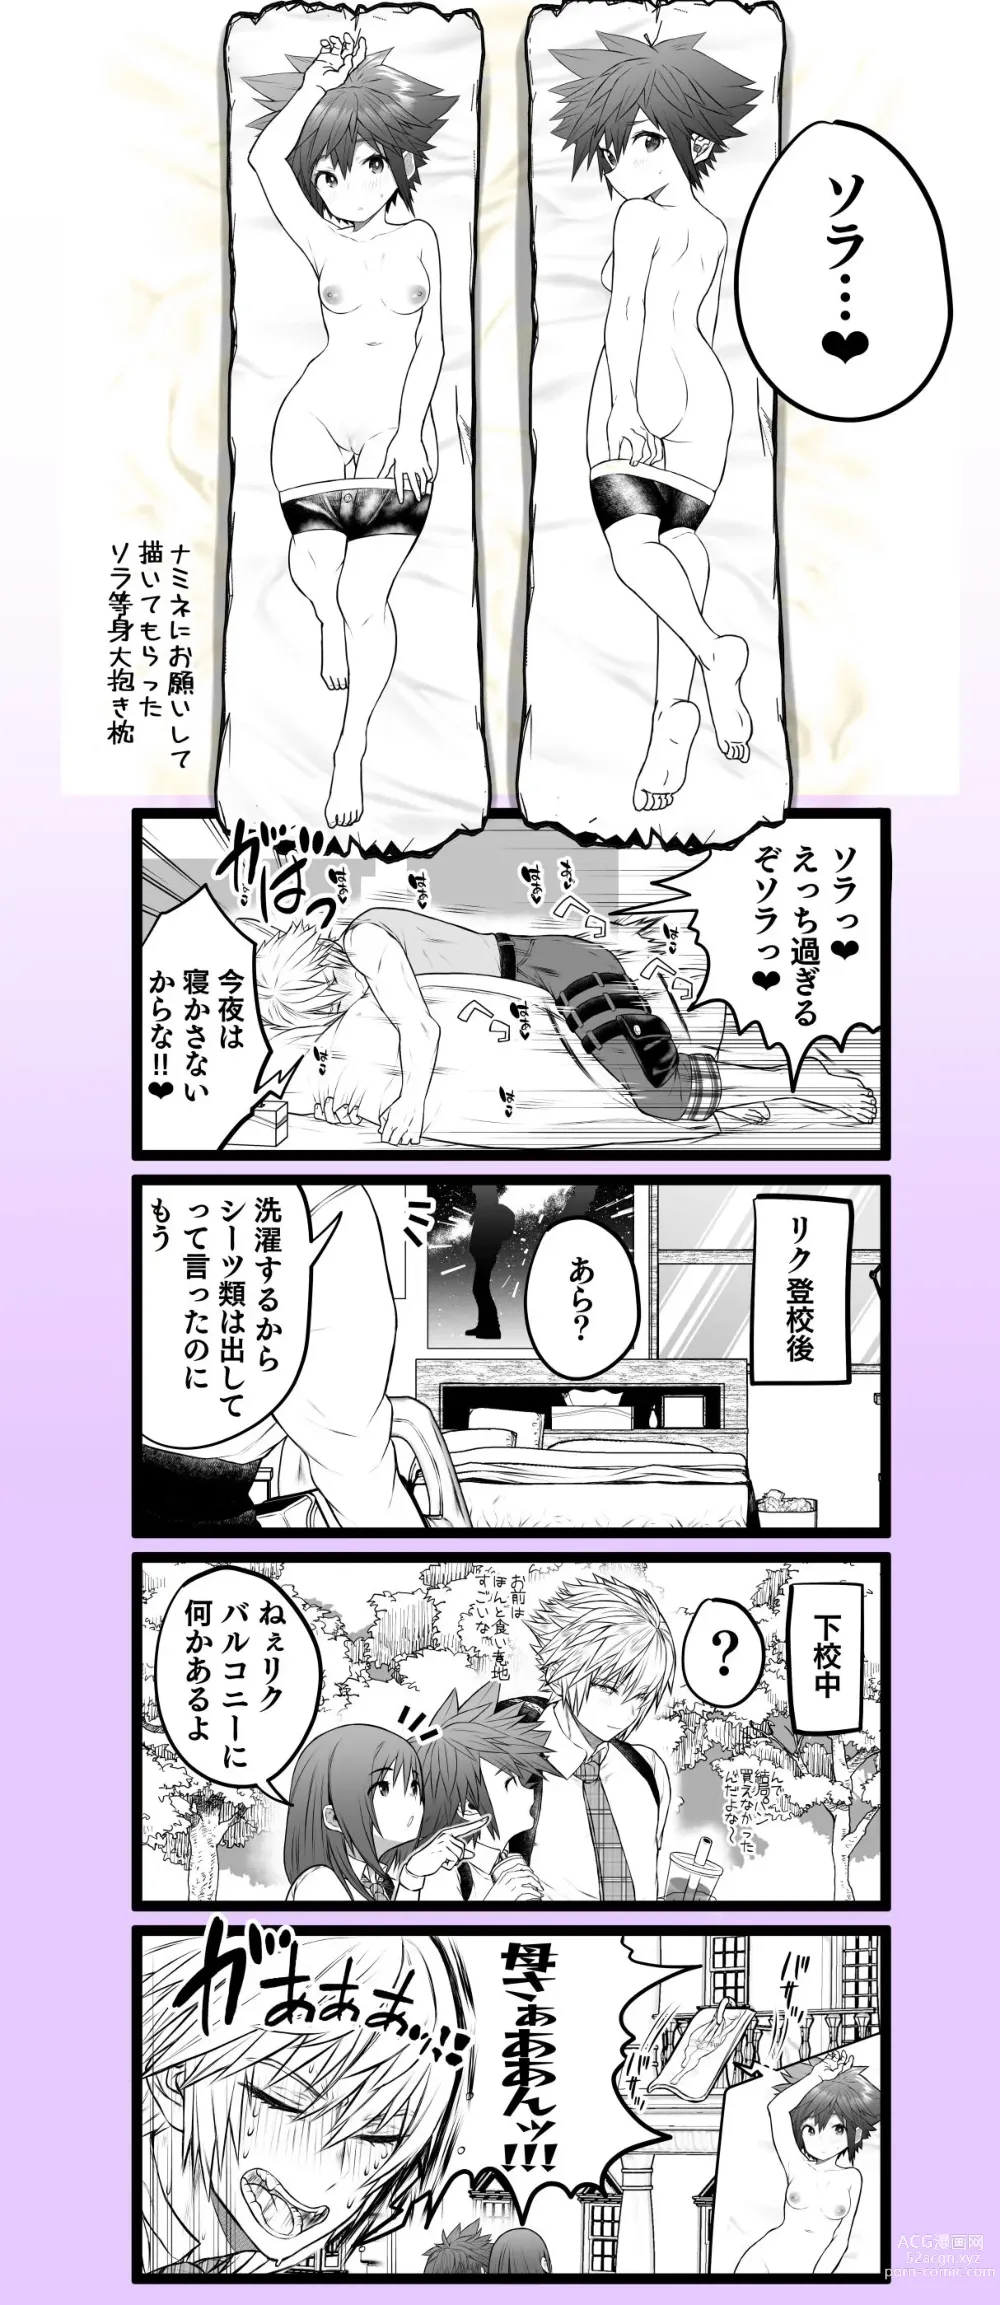 Page 2 of doujinshi Sora TS matome